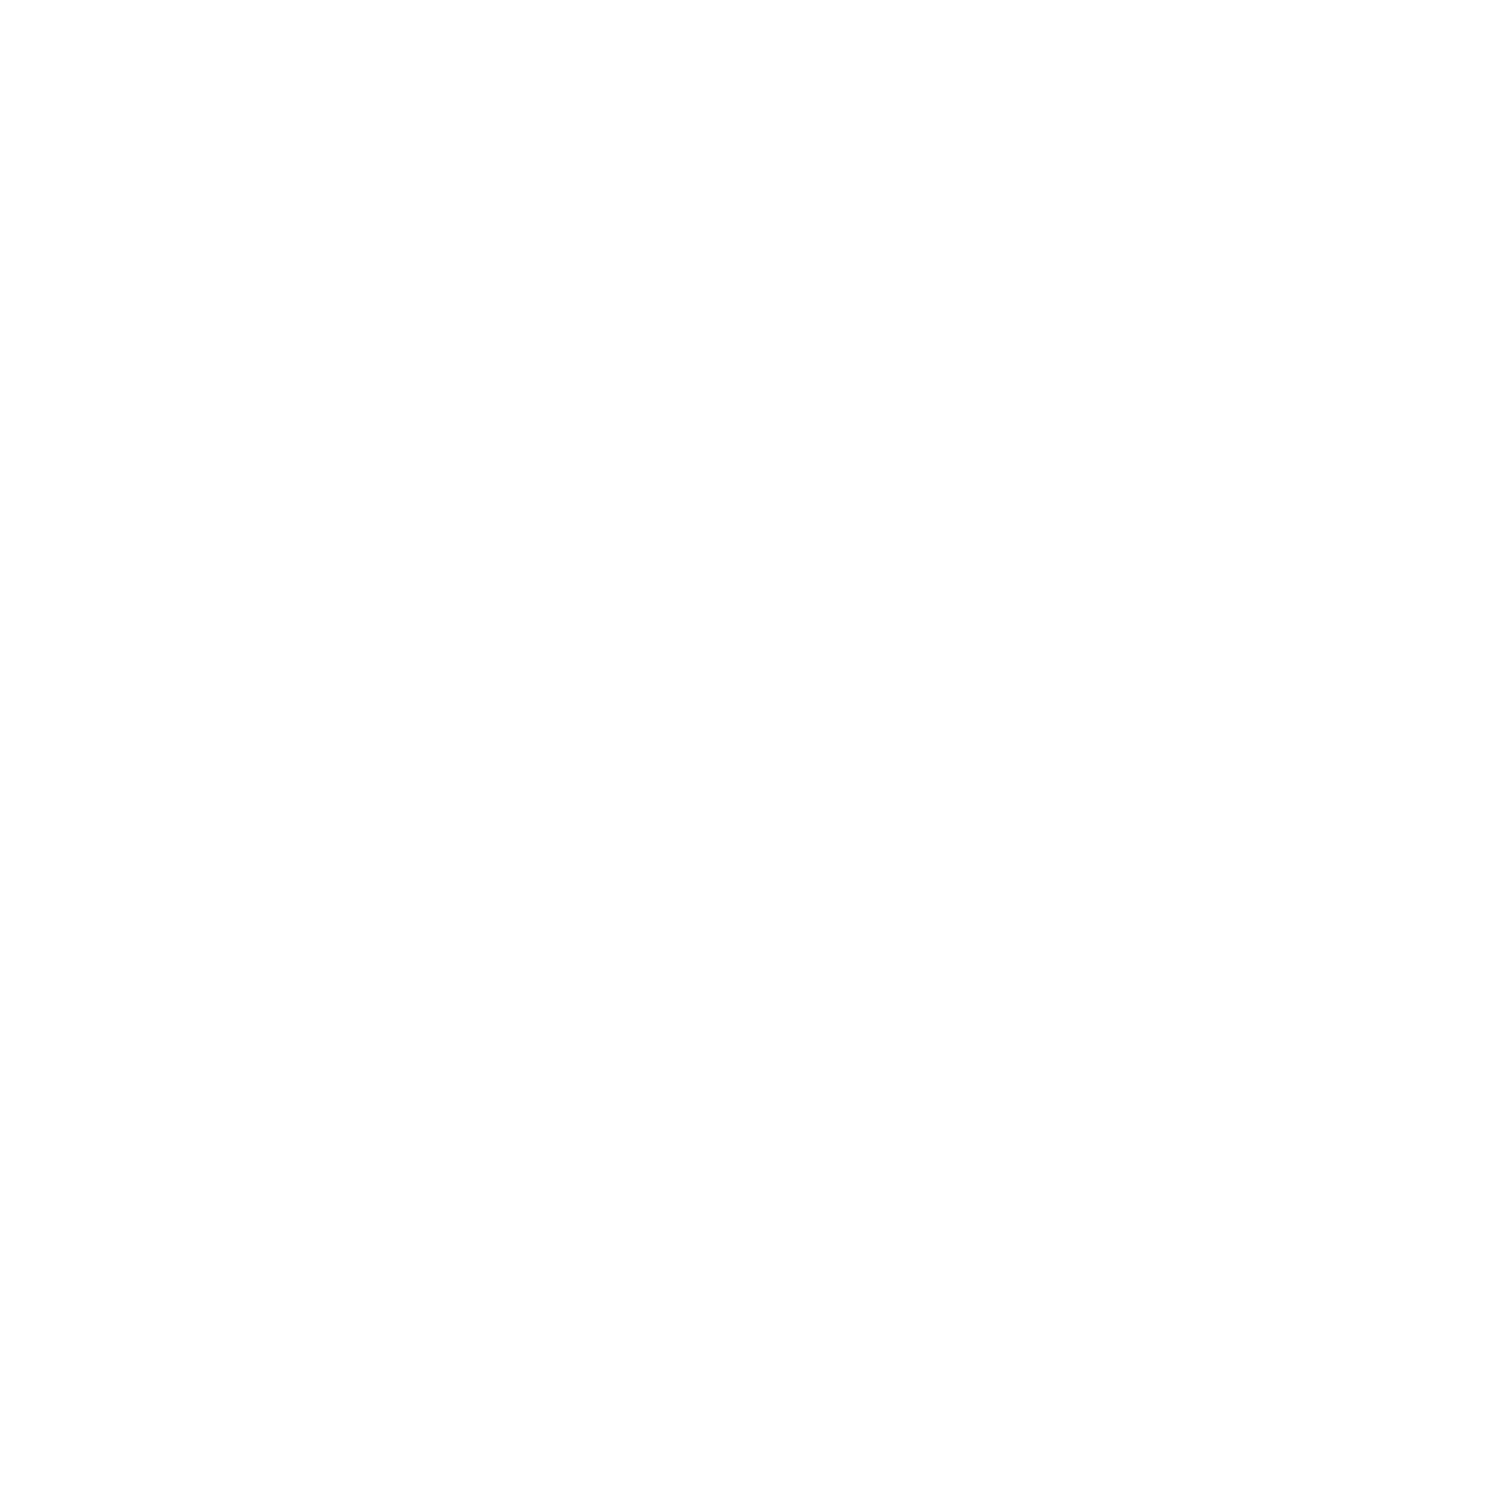 Ruben Chan Photographer